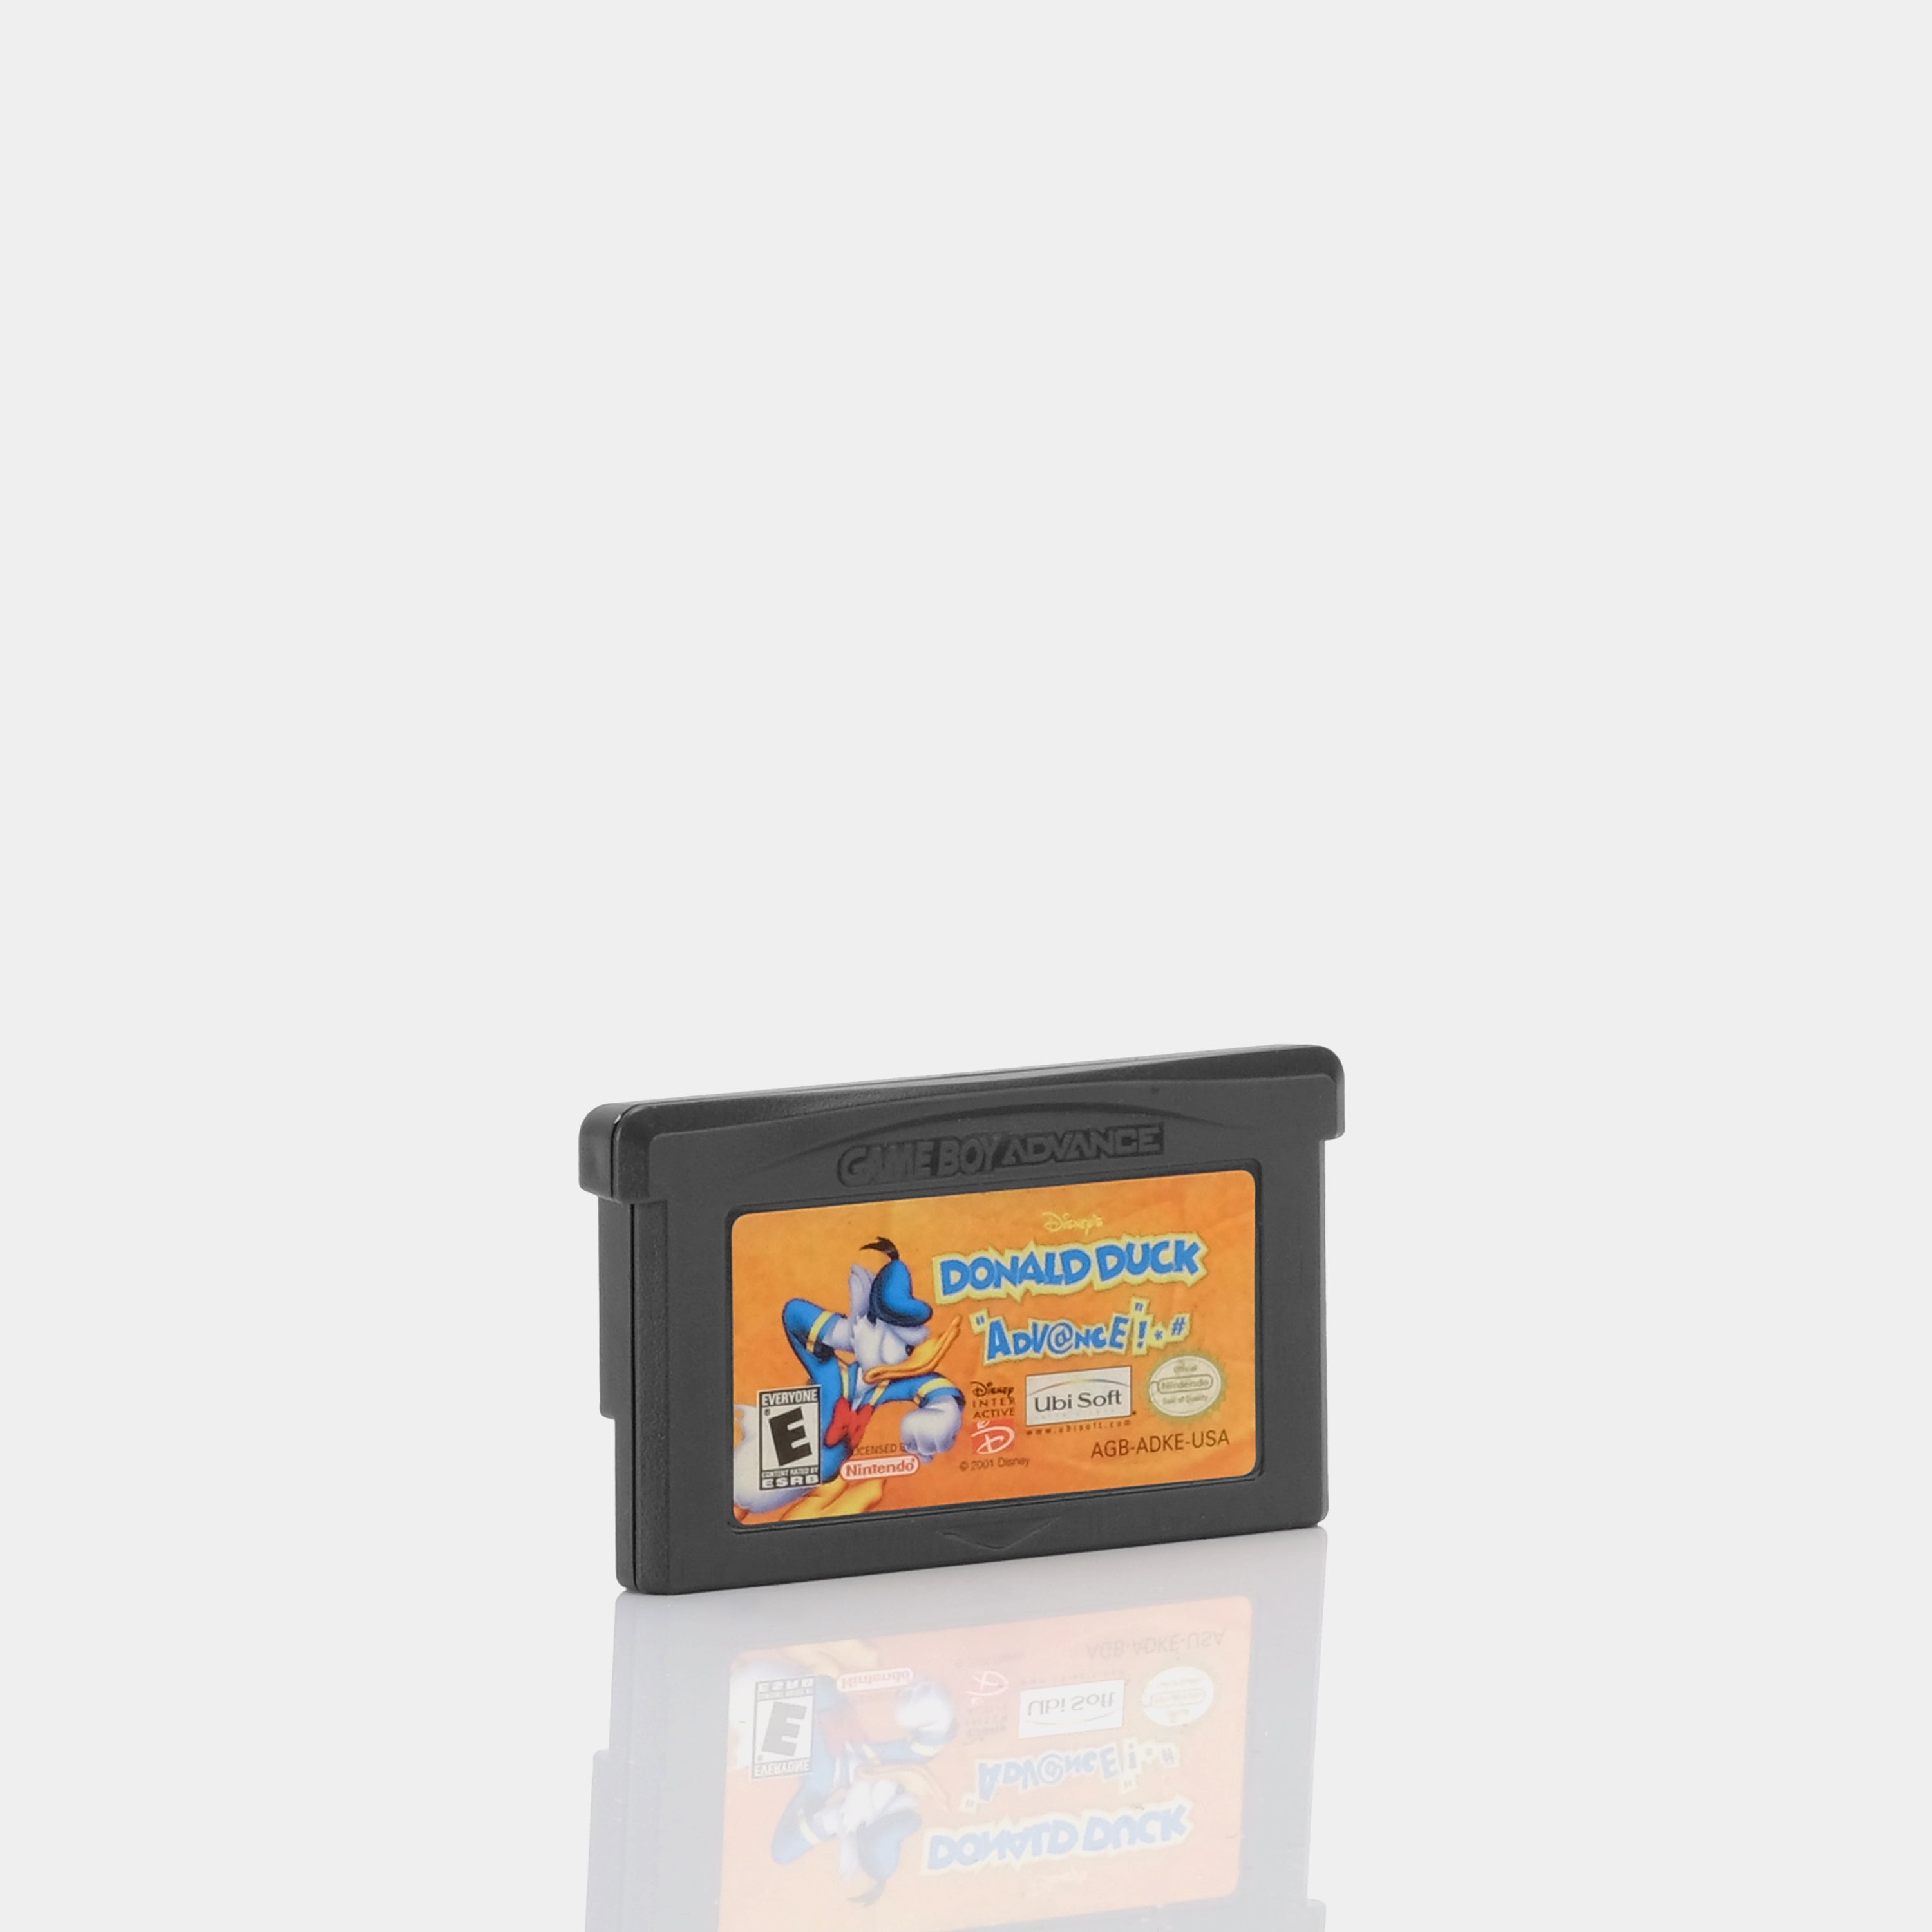 Disney's Donald Duck Advance Game Boy Advance Game